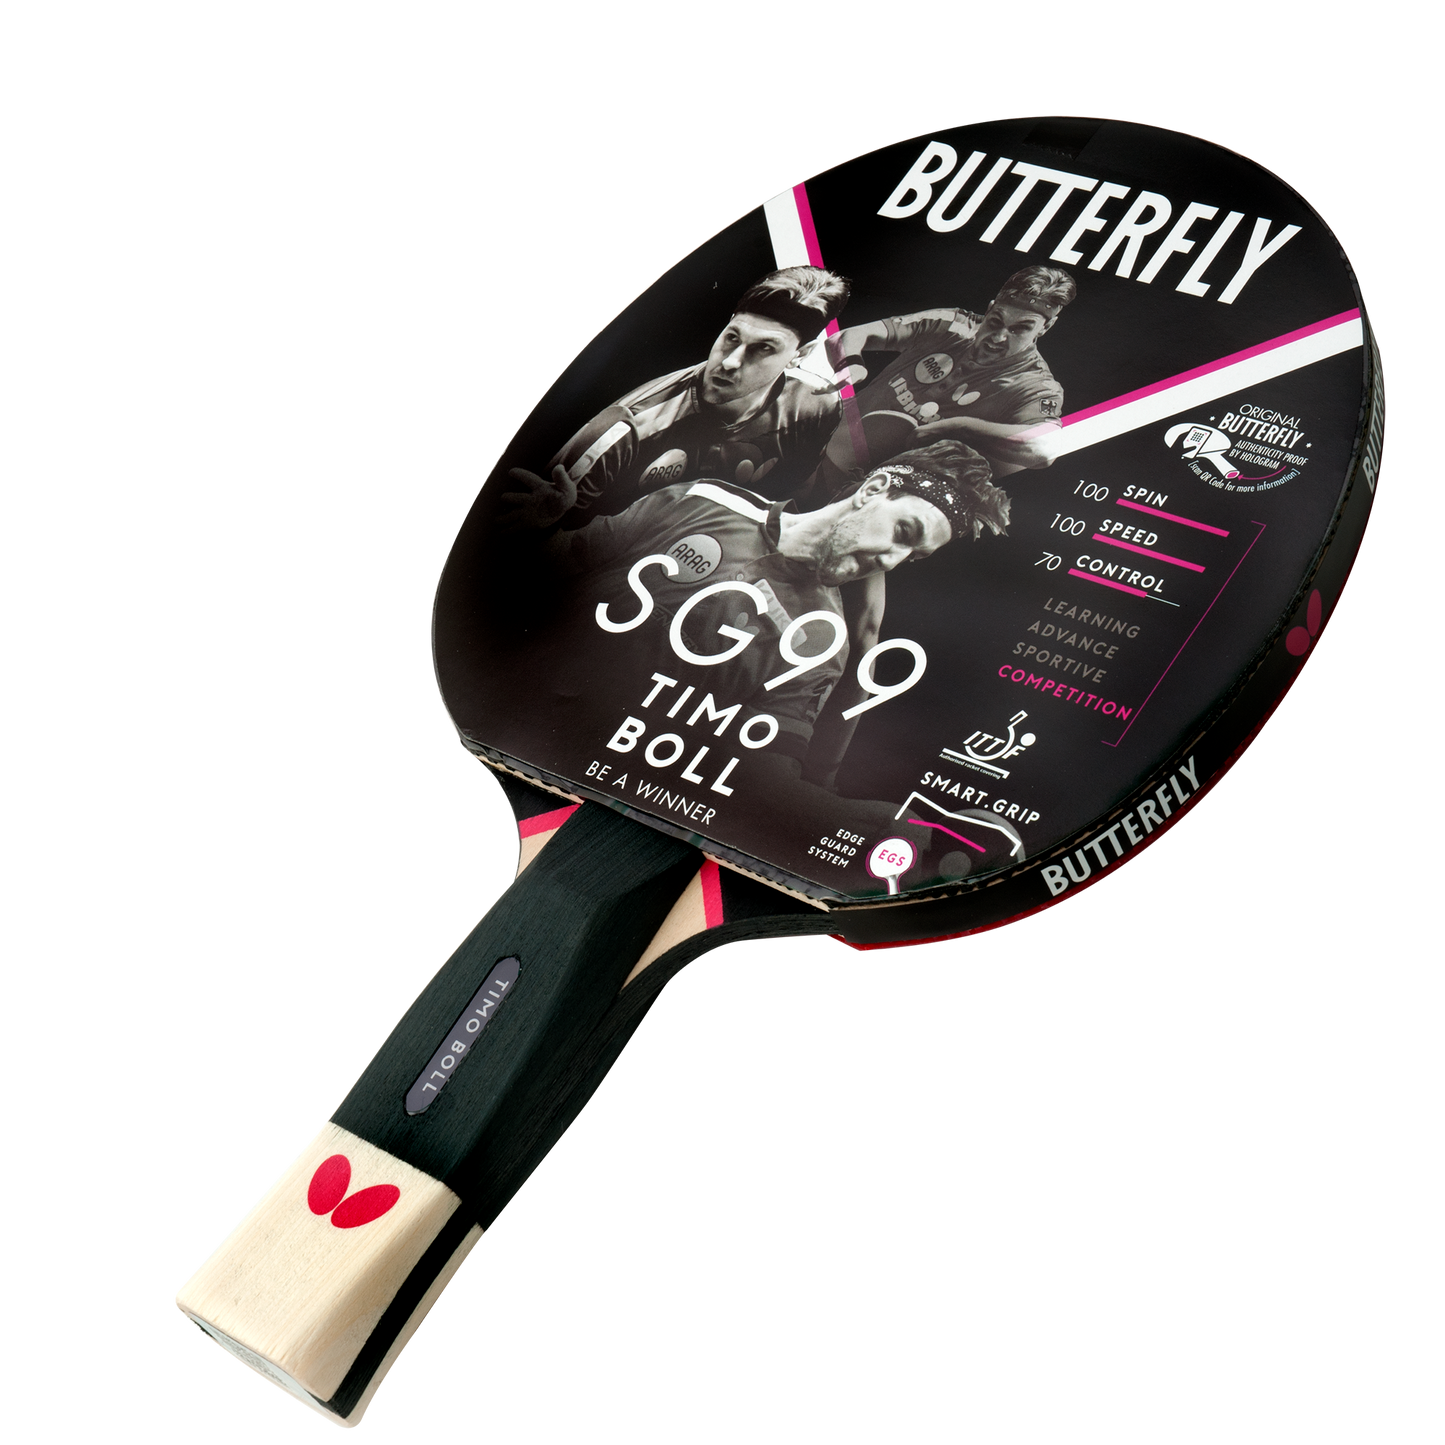 Butterfly Timo Boll SG99 Table Tennis Bat